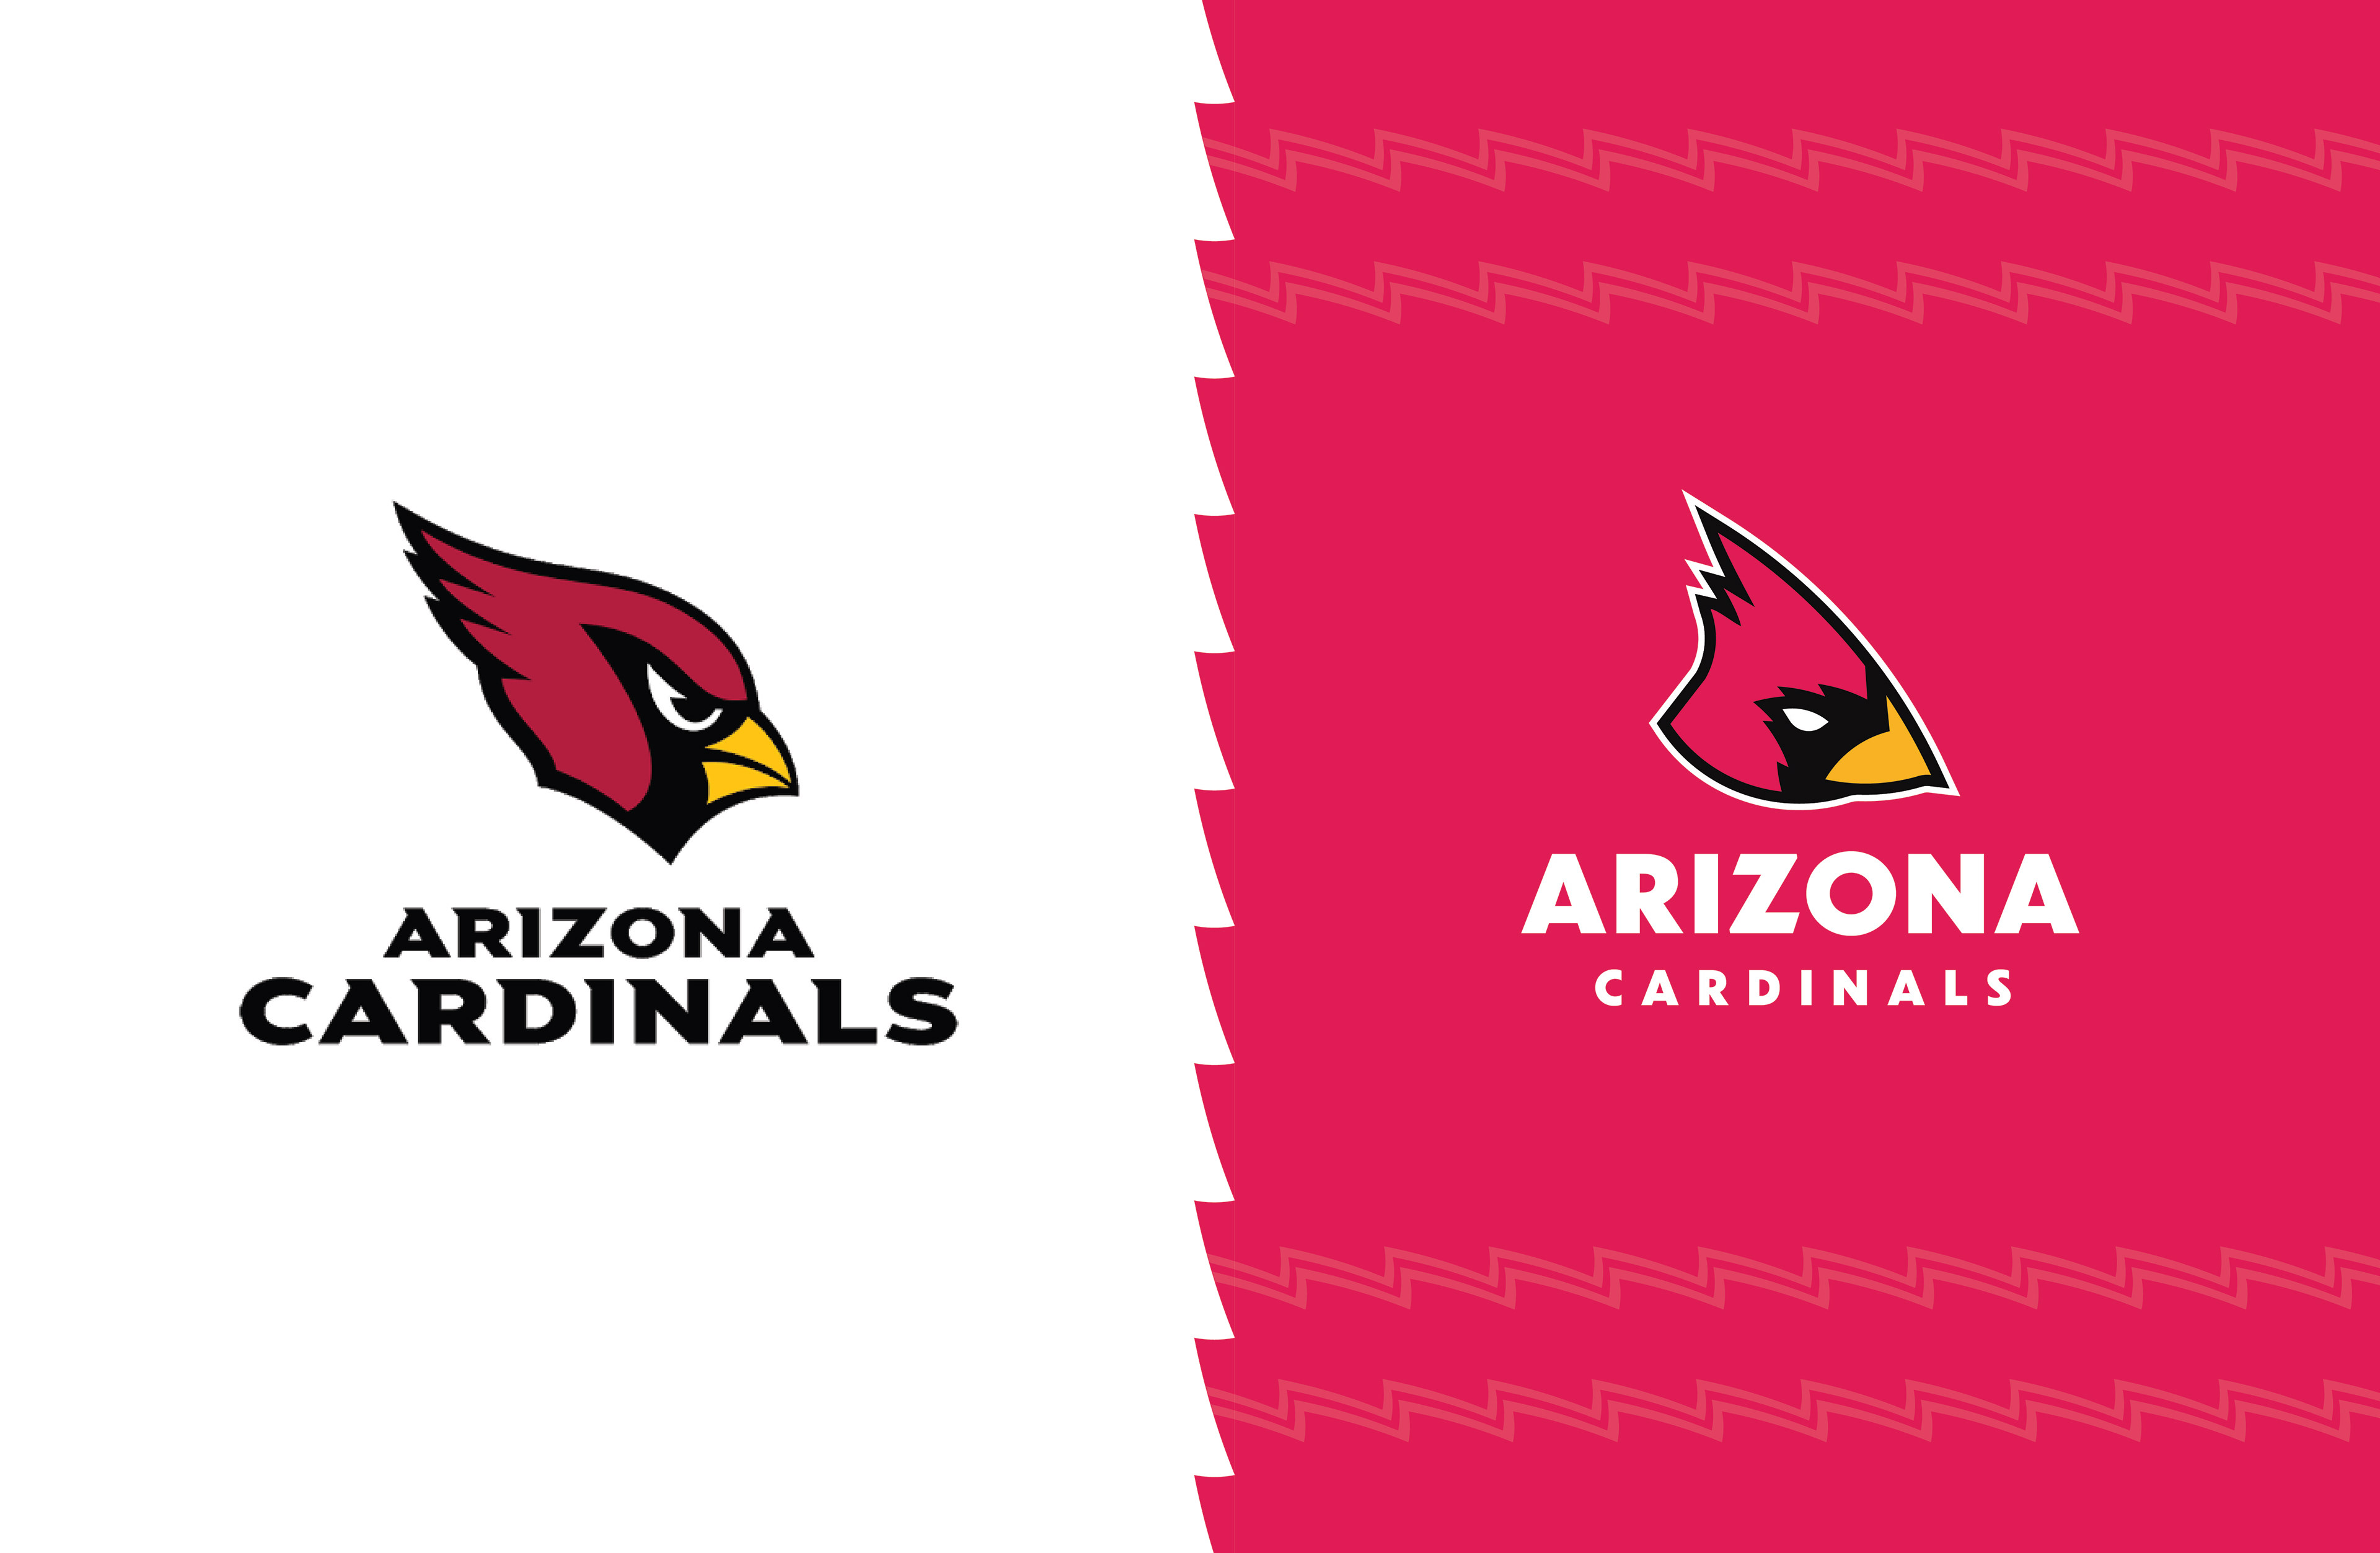 The inevitable fix the new Arizona Cardinals concept